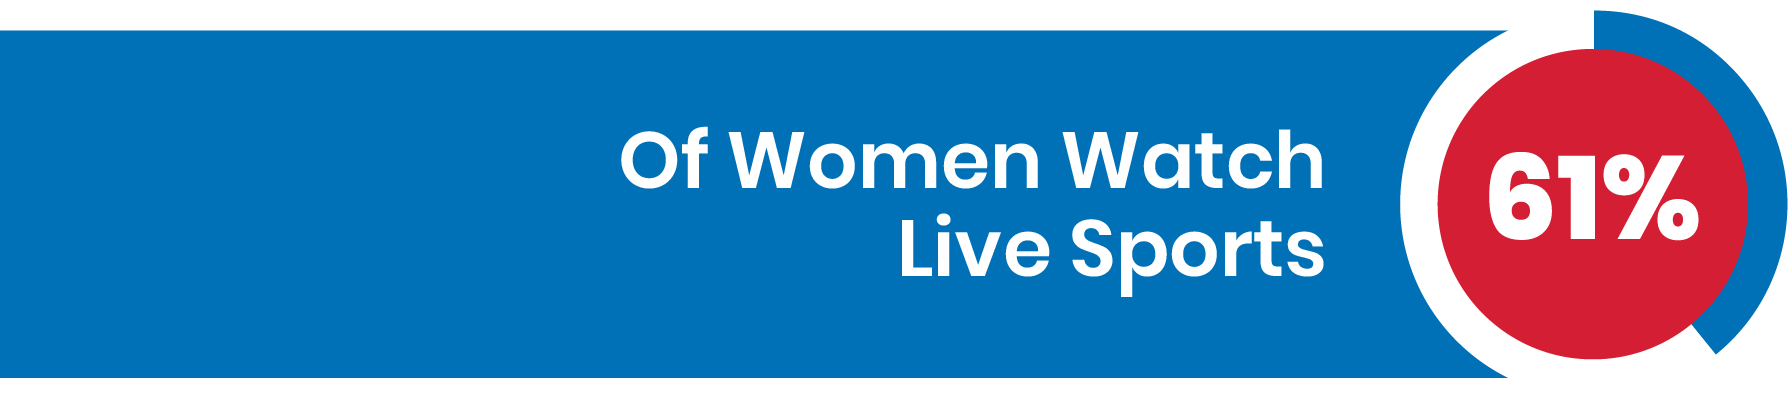 61% Of Women Watch Live Sports